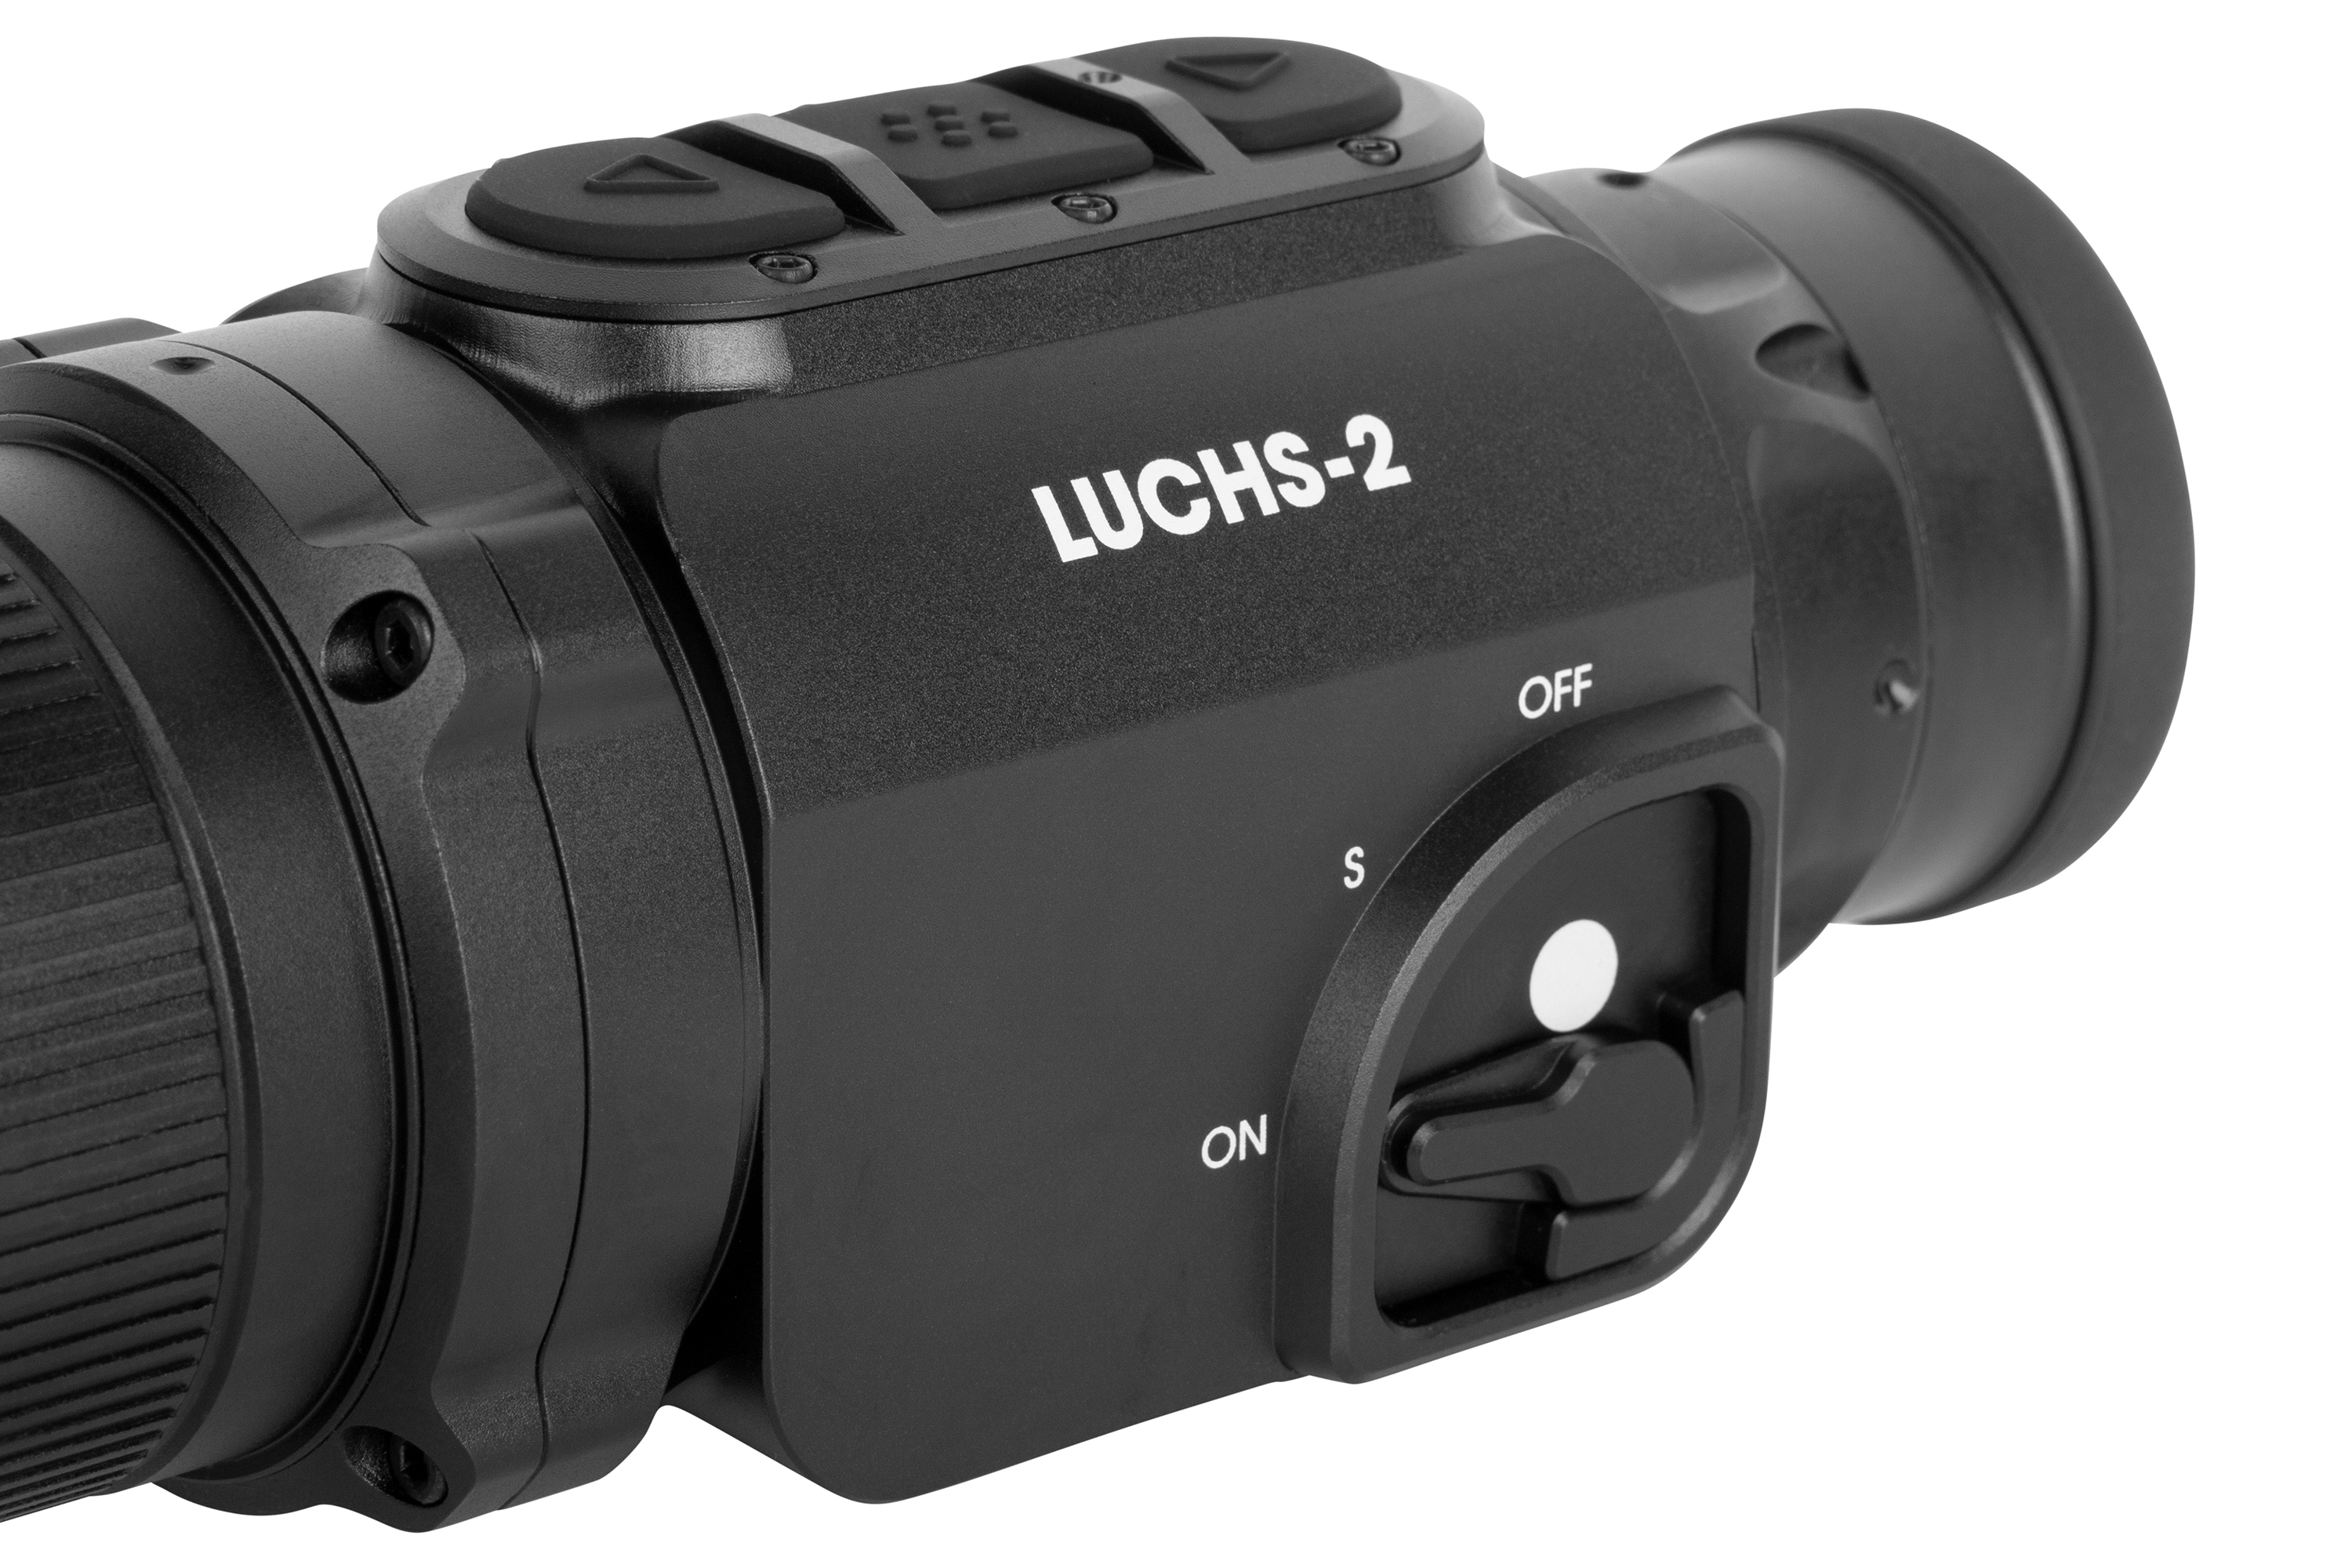 LIEMKE Luchs-2  Wärmebildkamera Vorsatzgerät